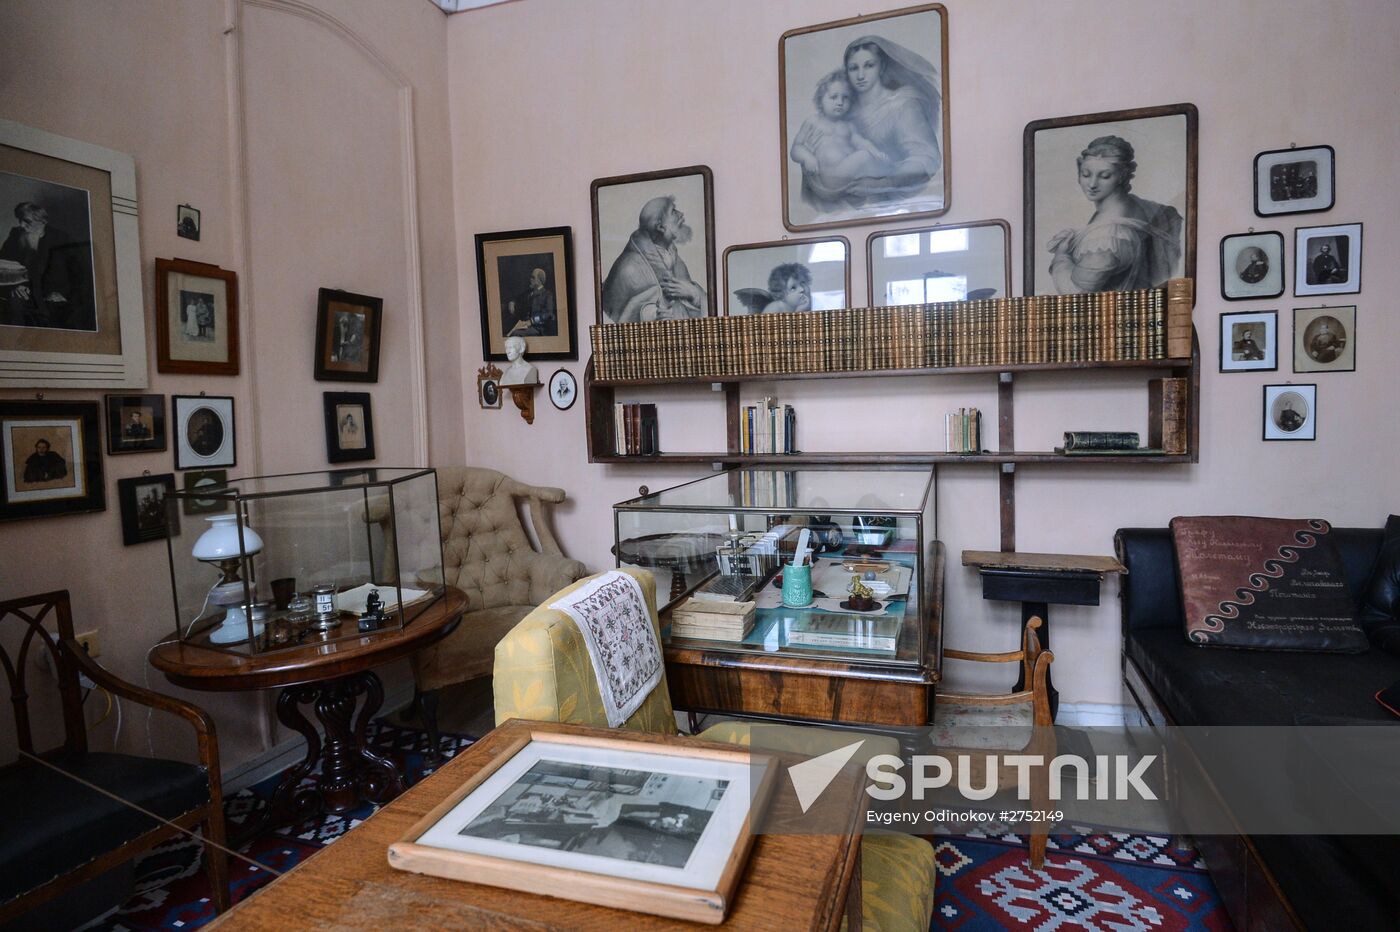 Leo Tolstoy's estate 'Yasnaya Polyana' in Tula Region